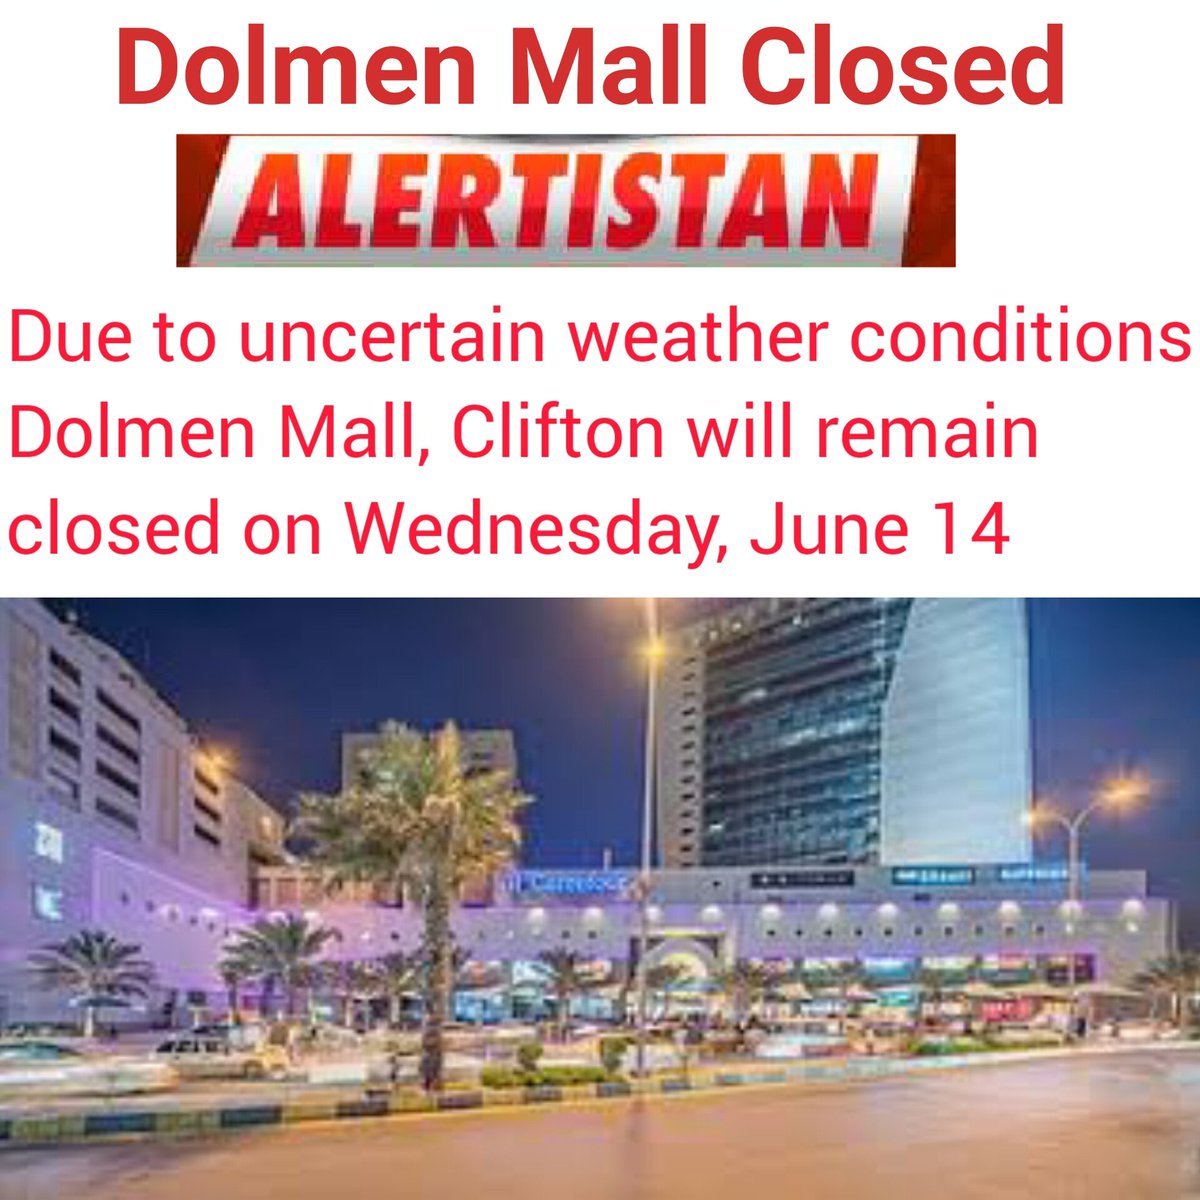 Dolmen Mall Closed